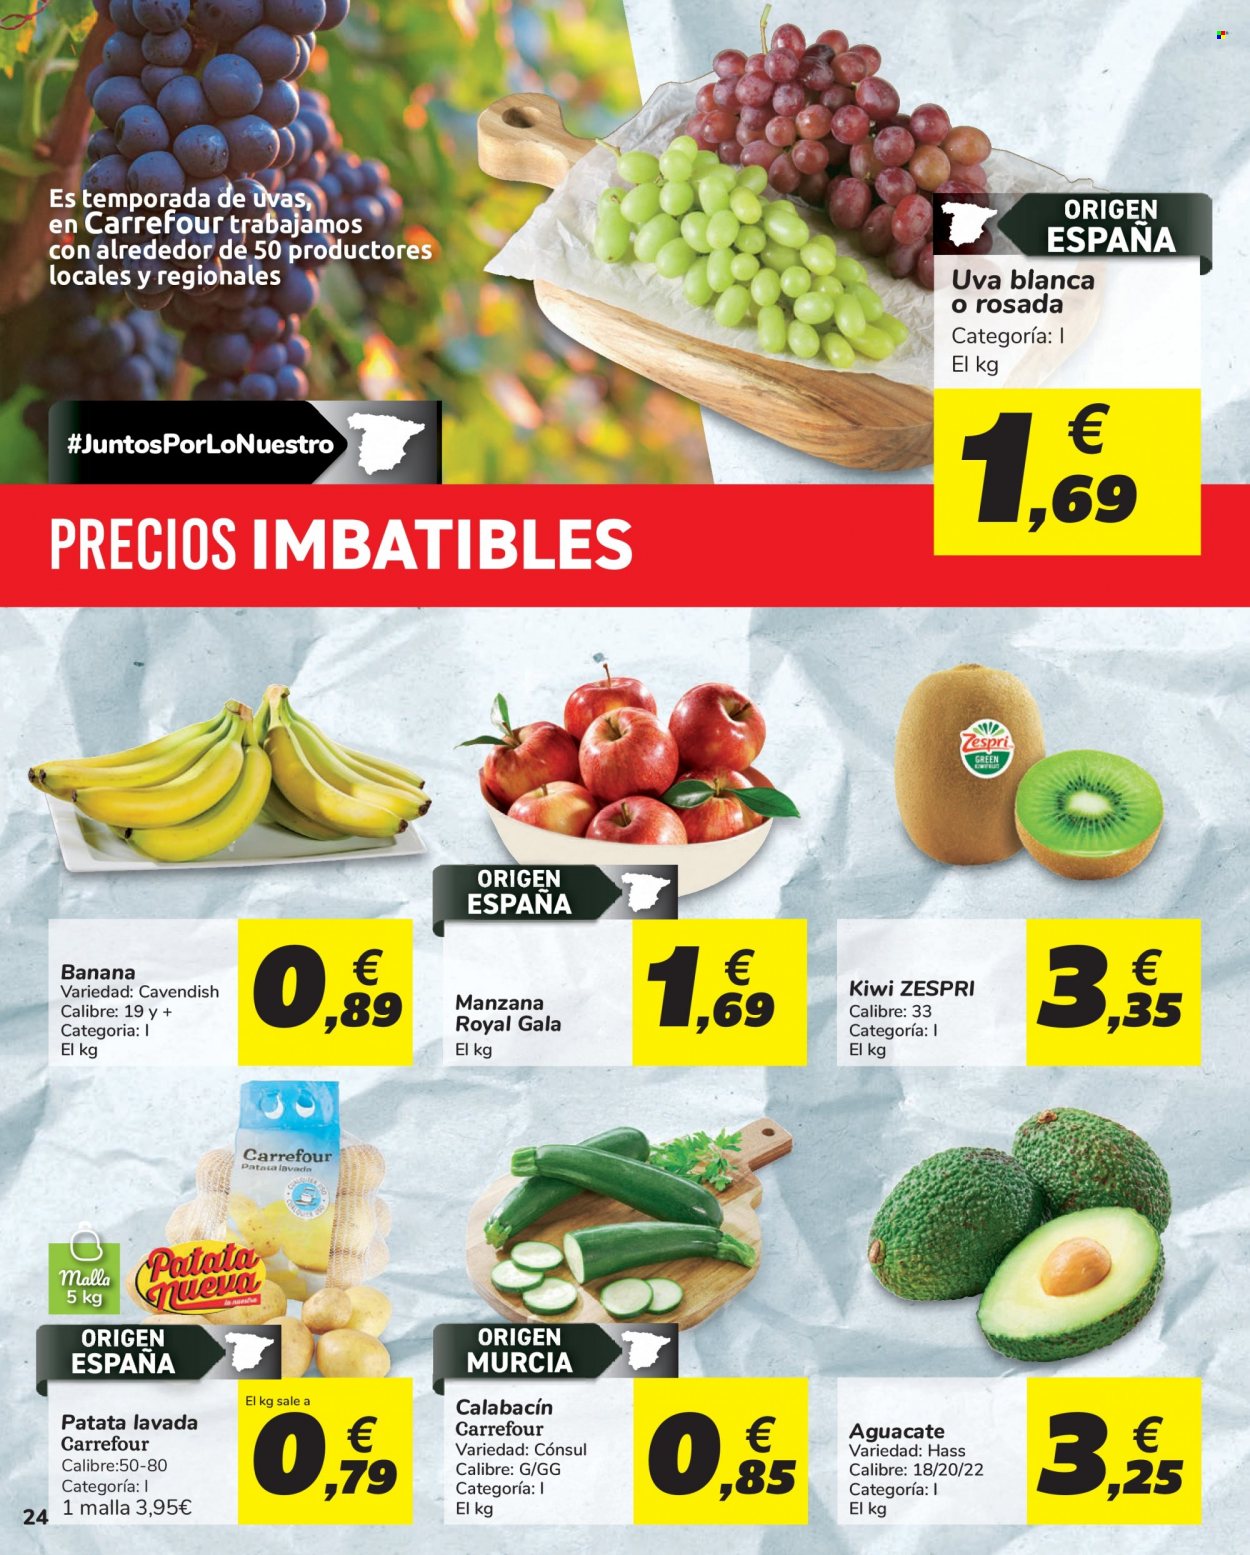 thumbnail - Folleto actual Carrefour - 10/09/21 - 22/09/21 - Ventas - banana, uva, kiwi, aguacate, manzanas, calabacín. Página 24.